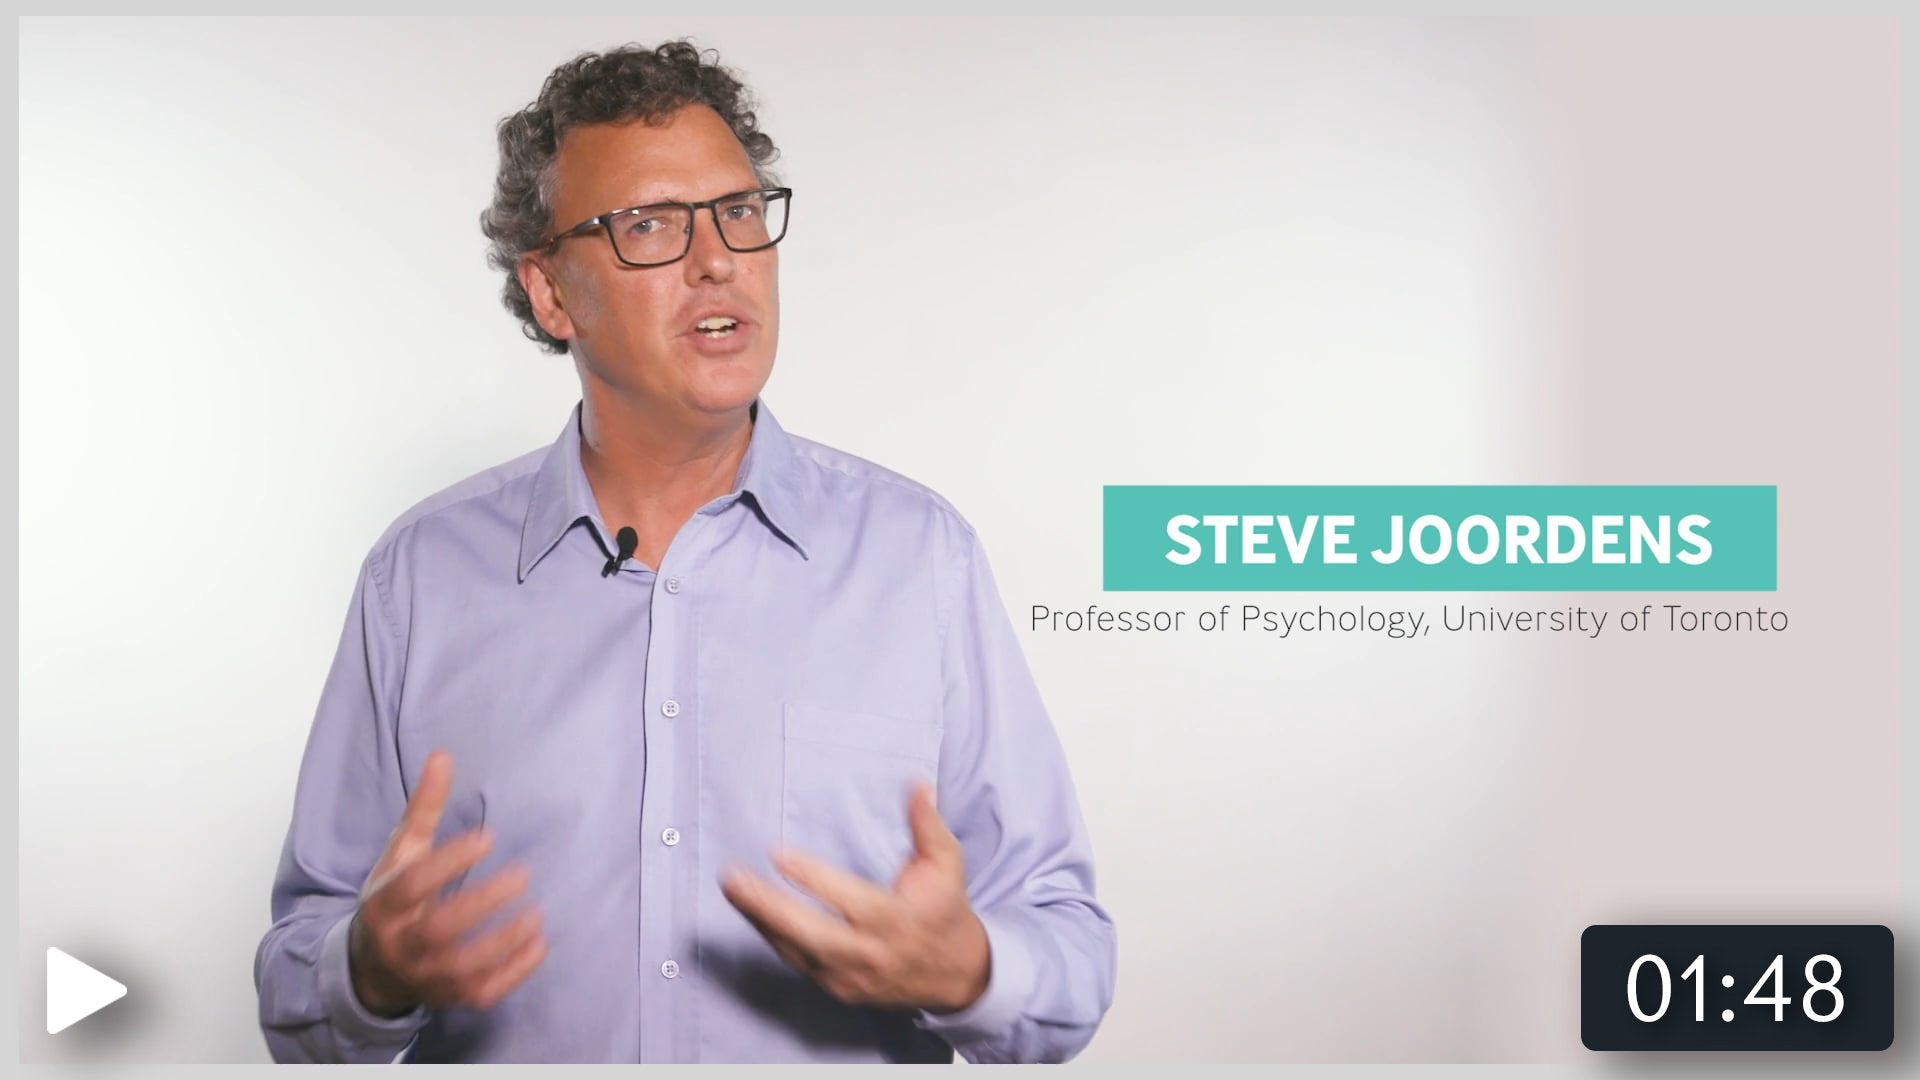 Meet Steve Joordens who discusses skill development vs. acquiring information